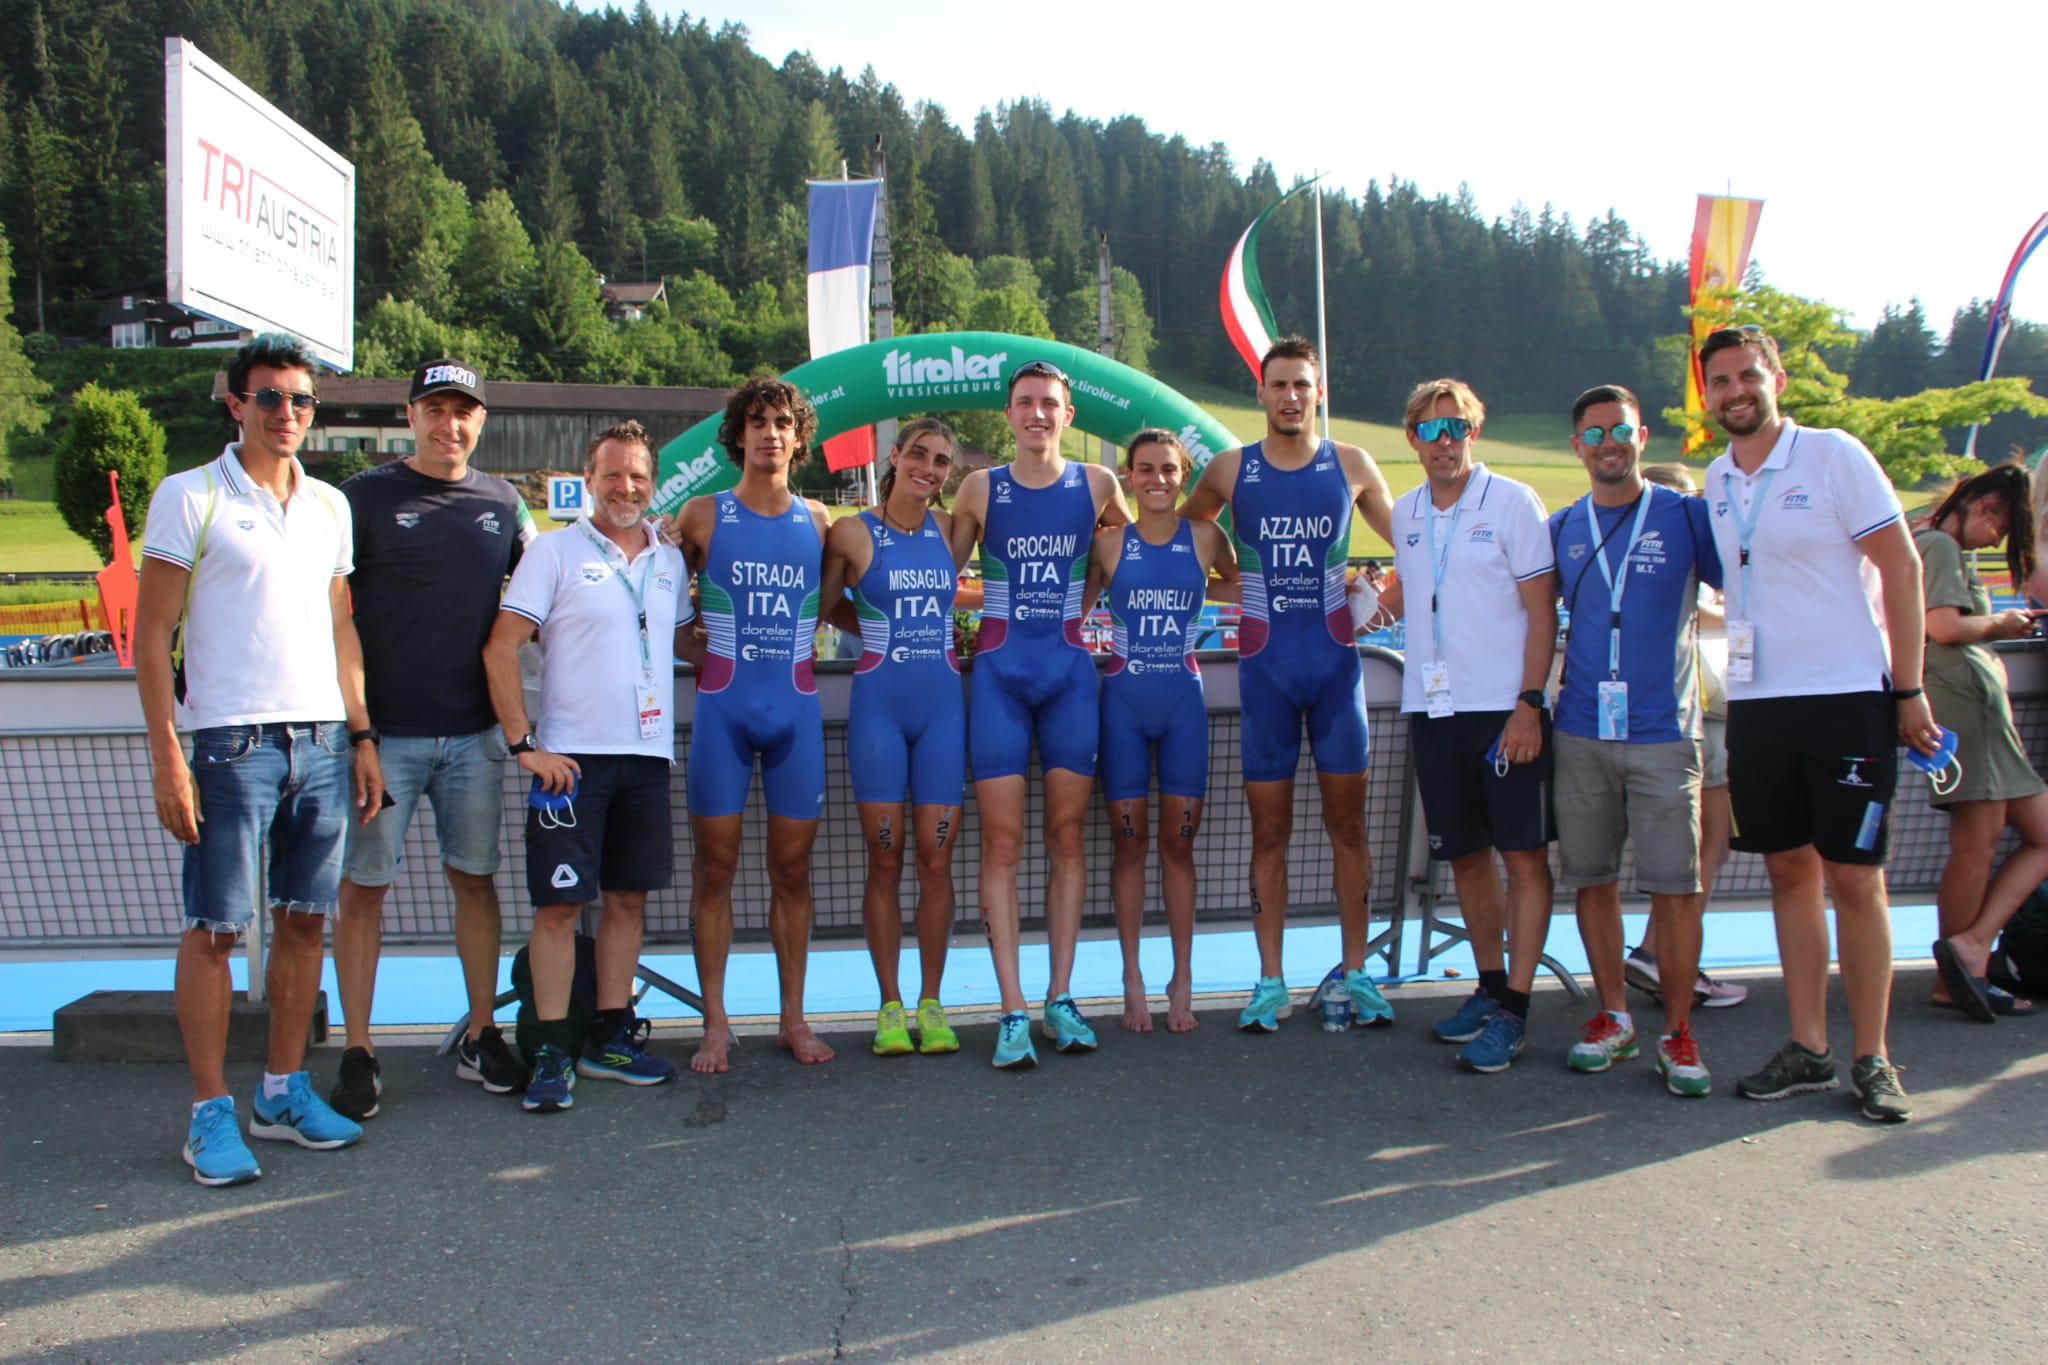 Europei Triathlon Sprint Kitzbuhel: i risultati degli azzurri. Domani la Mixed Relay 